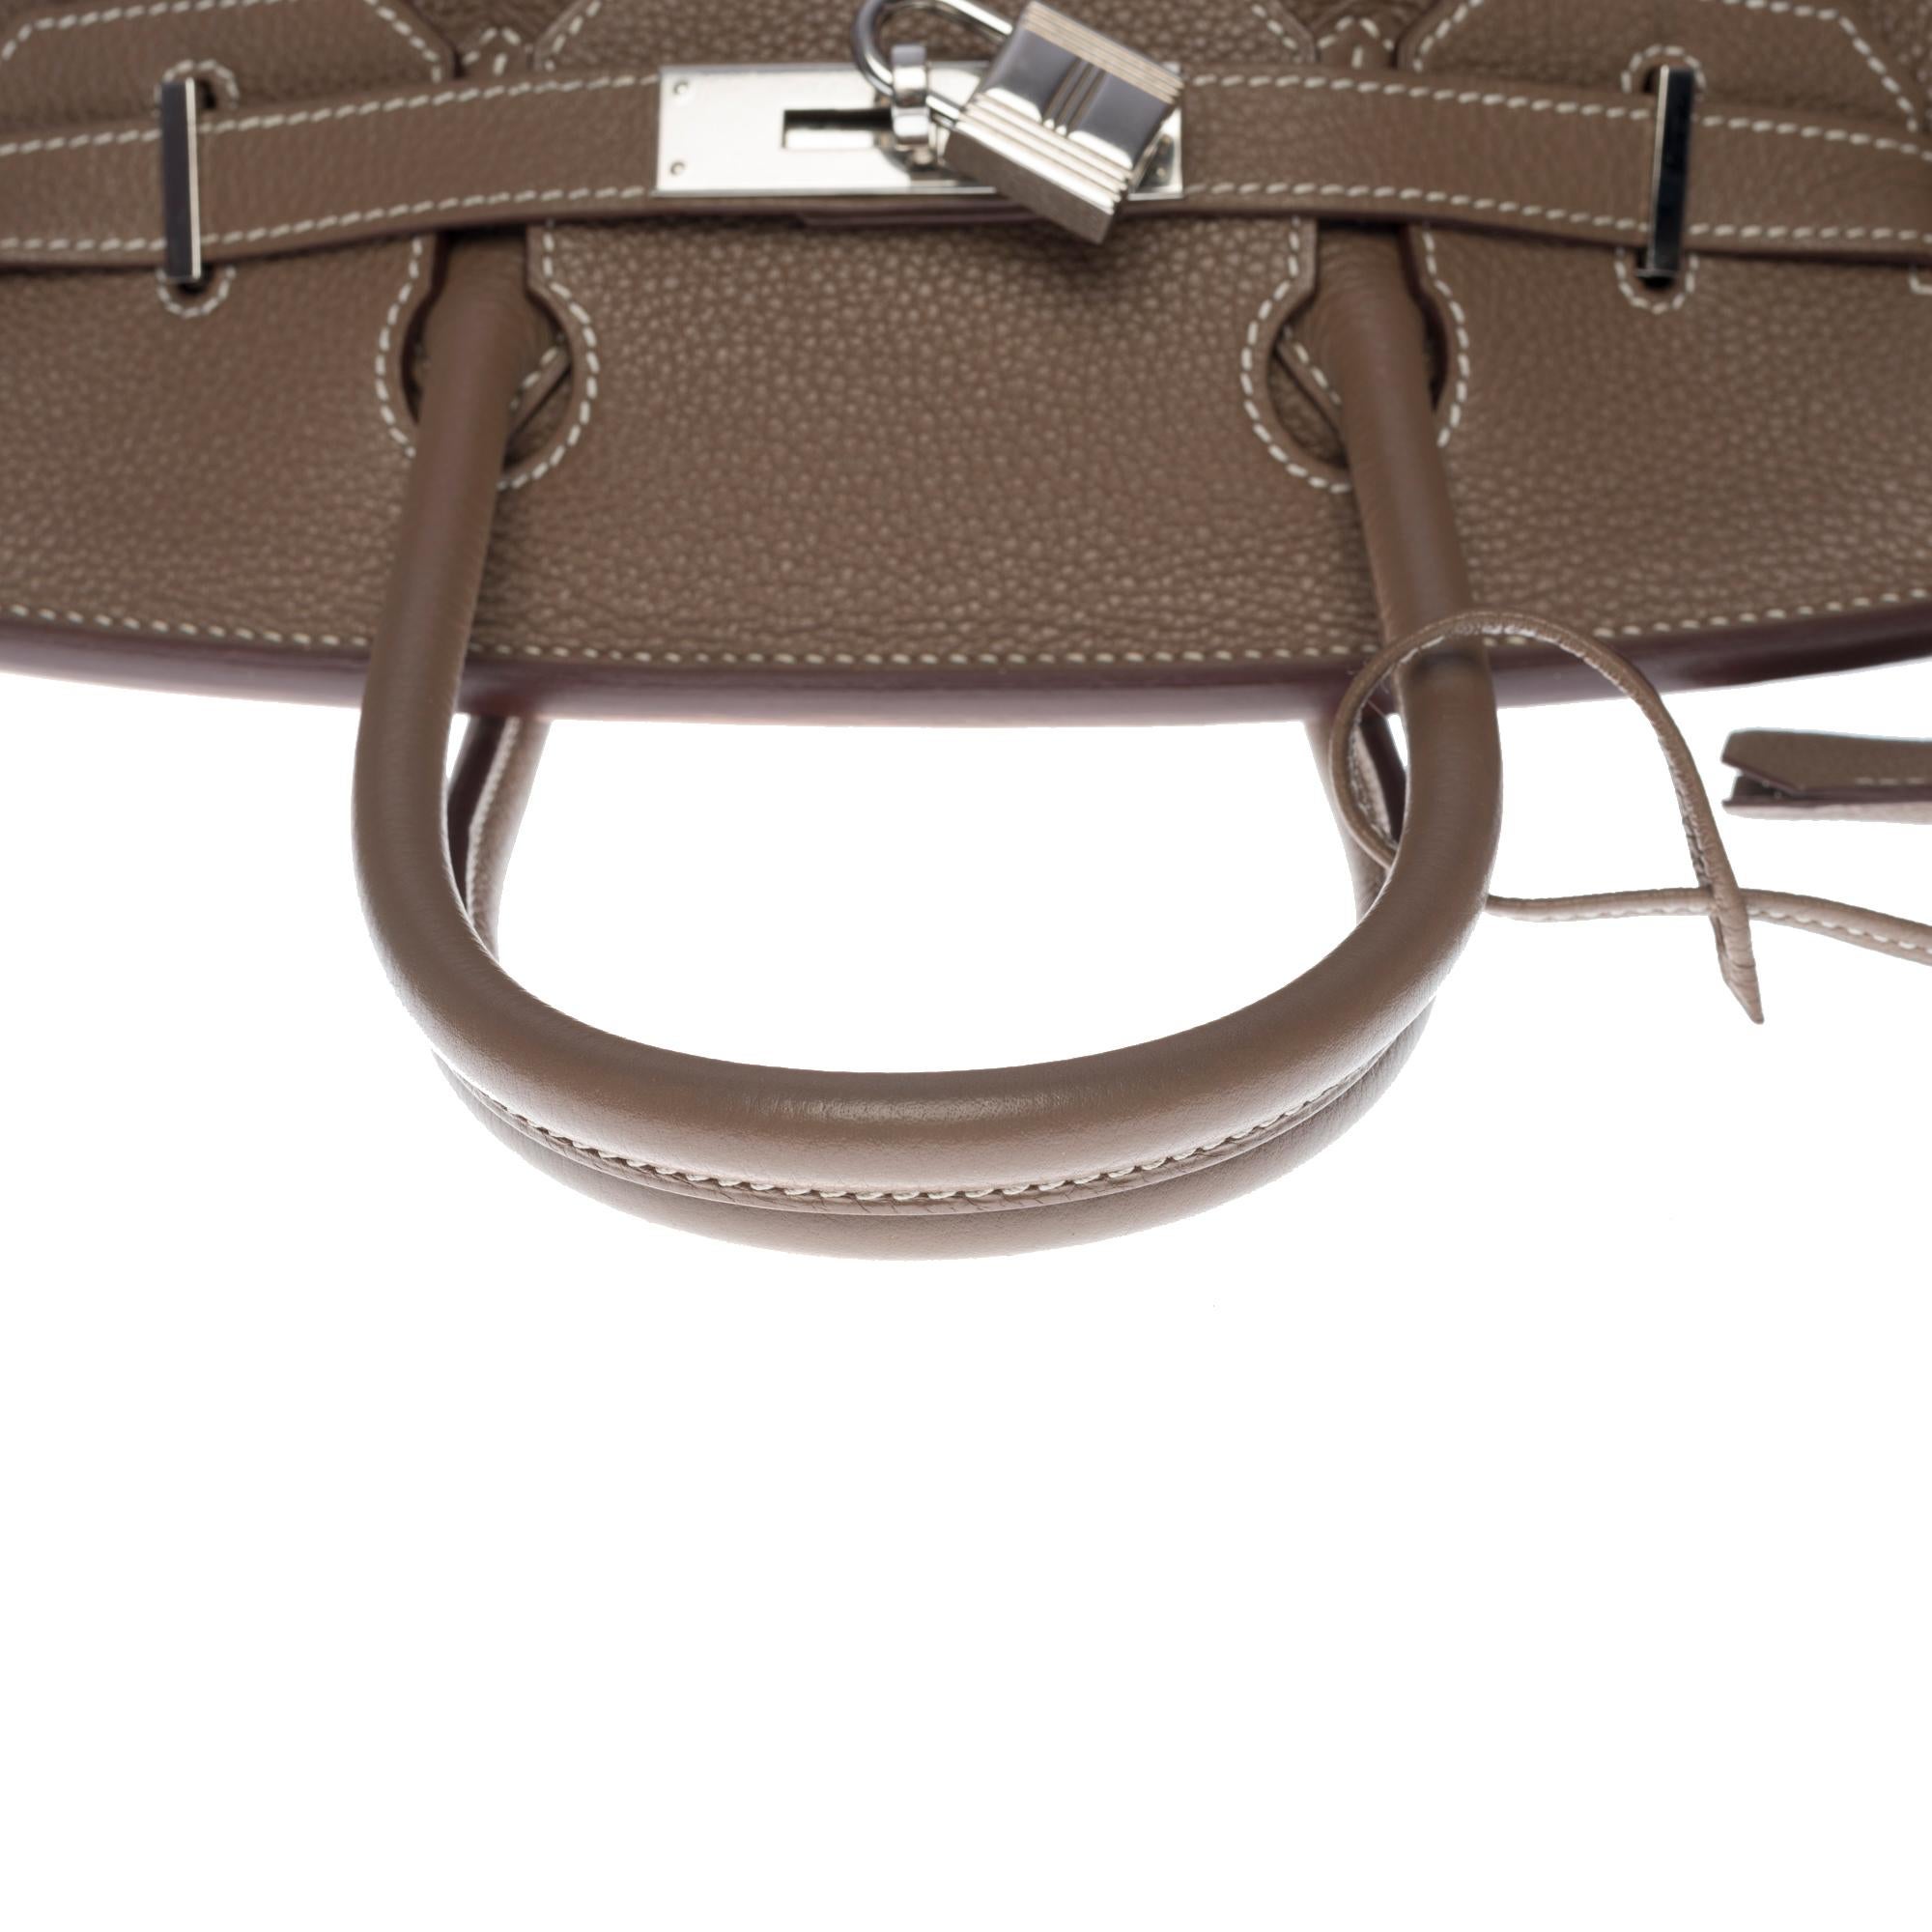 Women's Amazing Hermès Birkin 30 handbag in etoupe Togo leather, SHW